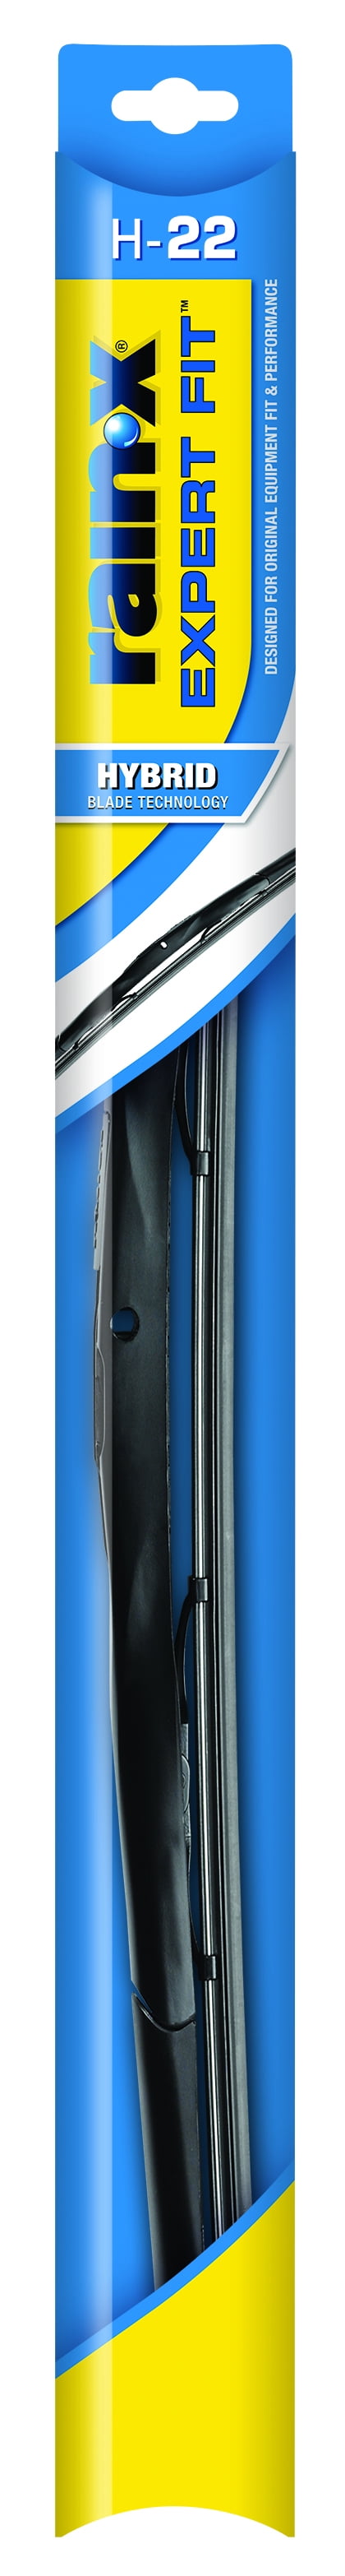 Rain-X Expert Fit Hybrid Windshield Wiper Blade 22" Replacement H22